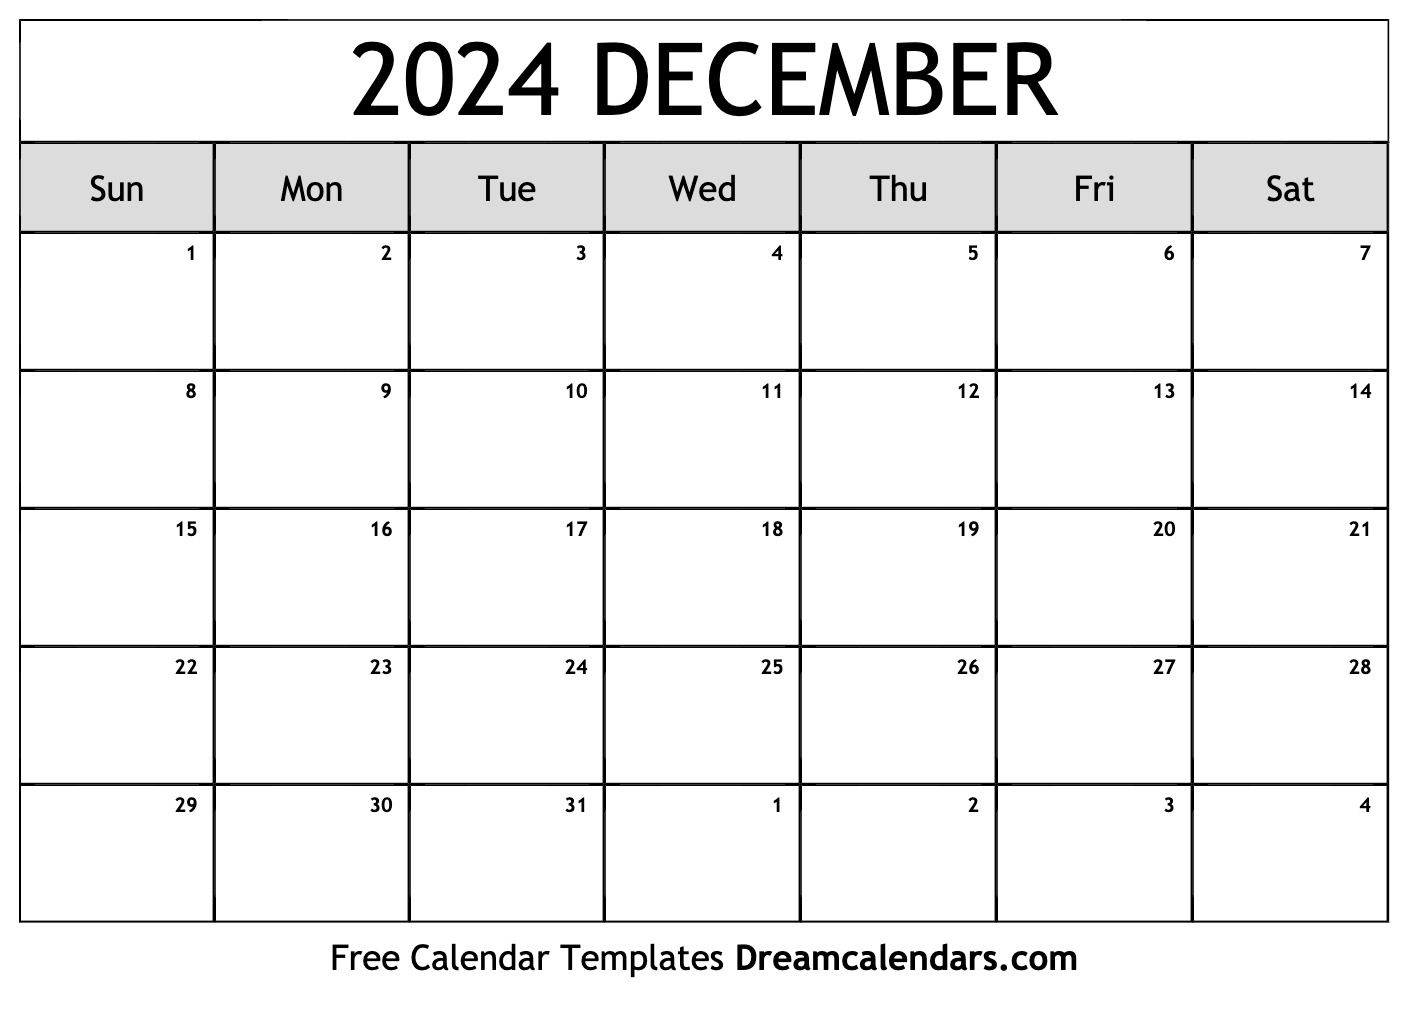 December 2024 Calendar | Free Blank Printable With Holidays | Free Printable Calendar December 2024